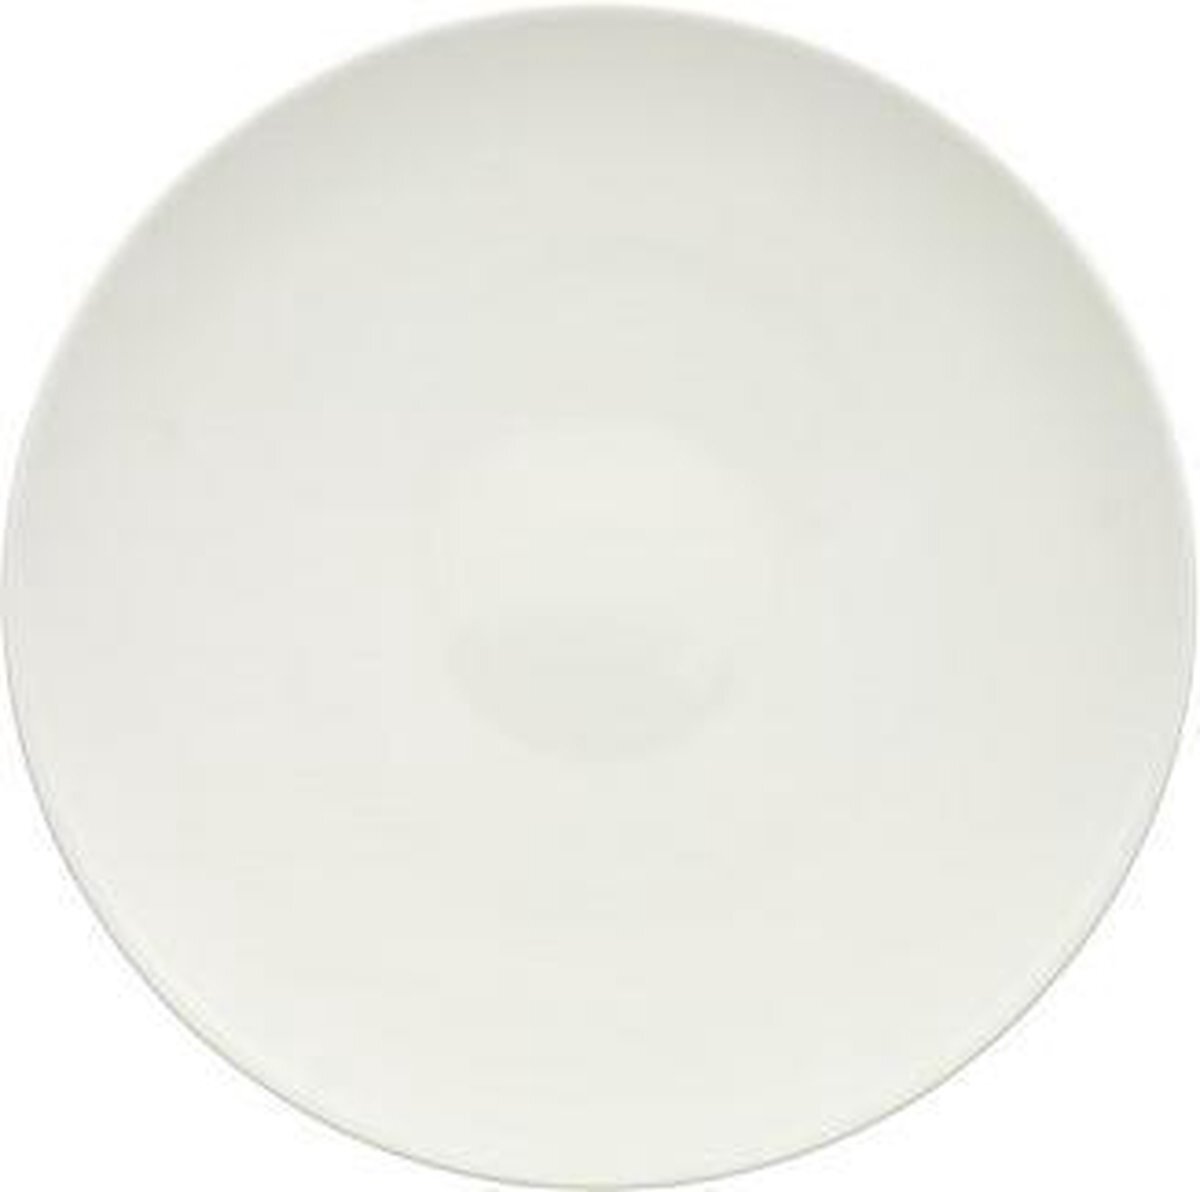 Villeroy & Boch Anmut dessertbord, Coupé, 21 cm, porselein Bone China, meerkleurig wit, gebroken wit